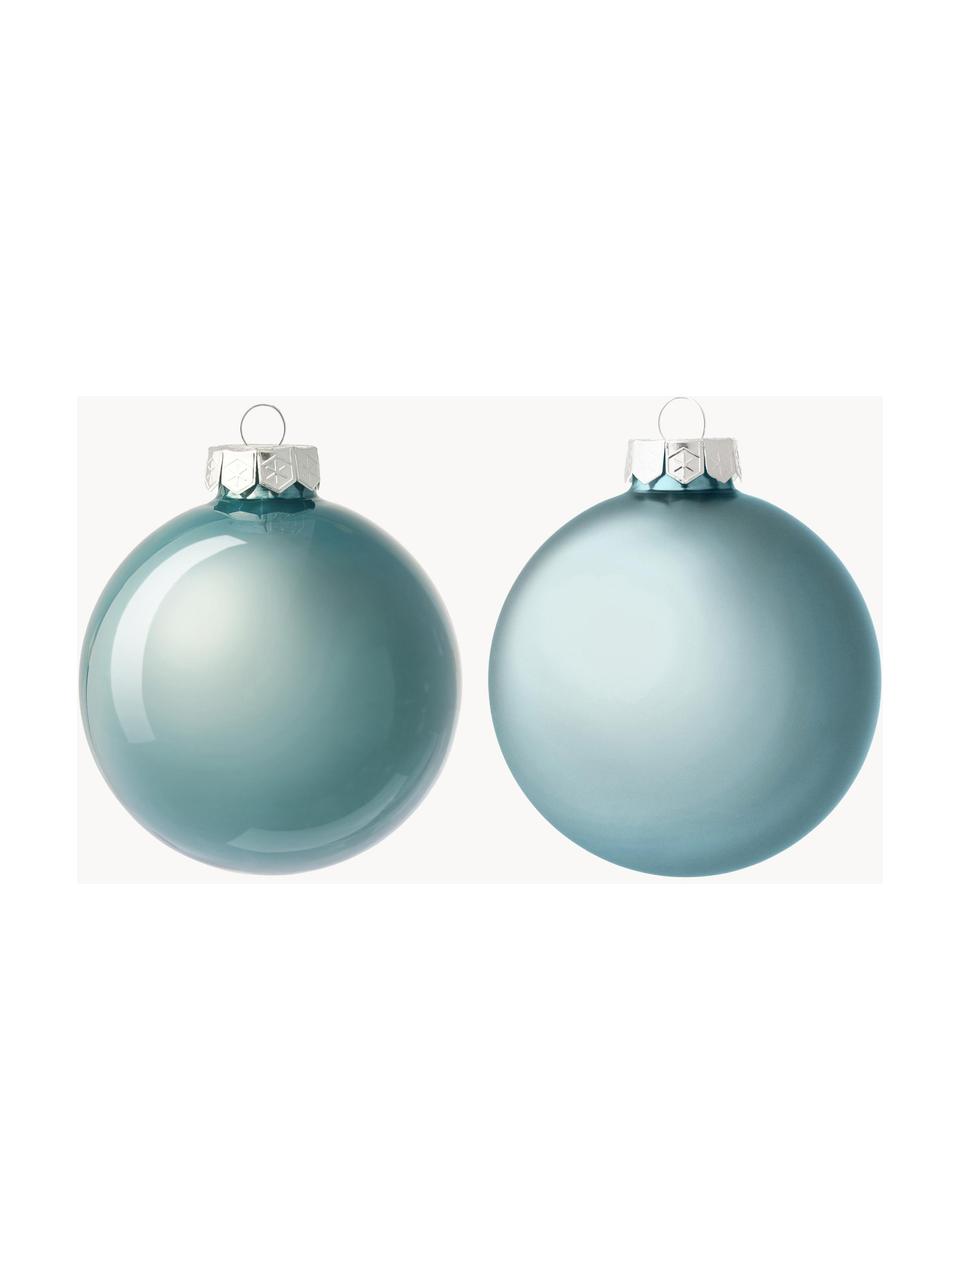 Weihnachtskugeln Evergreen matt/glänzend, verschiedene Grössen, Hellblau, Ø 8 cm, 6 Stück